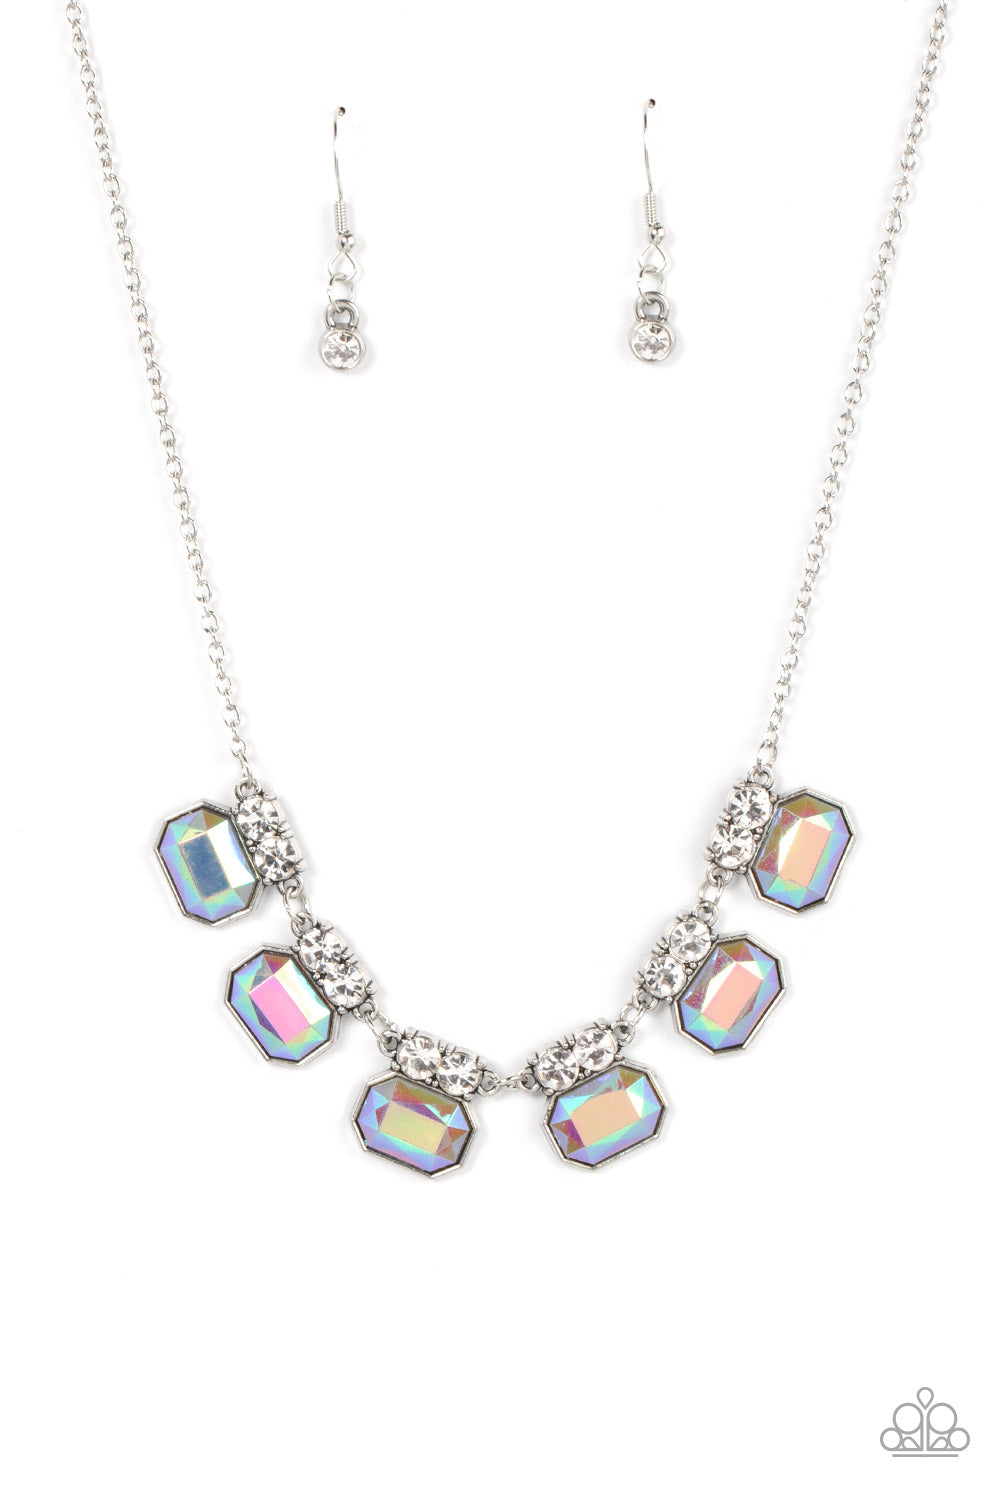 five-dollar-jewelry-interstellar-inspiration-silver-necklace-paparazzi-accessories